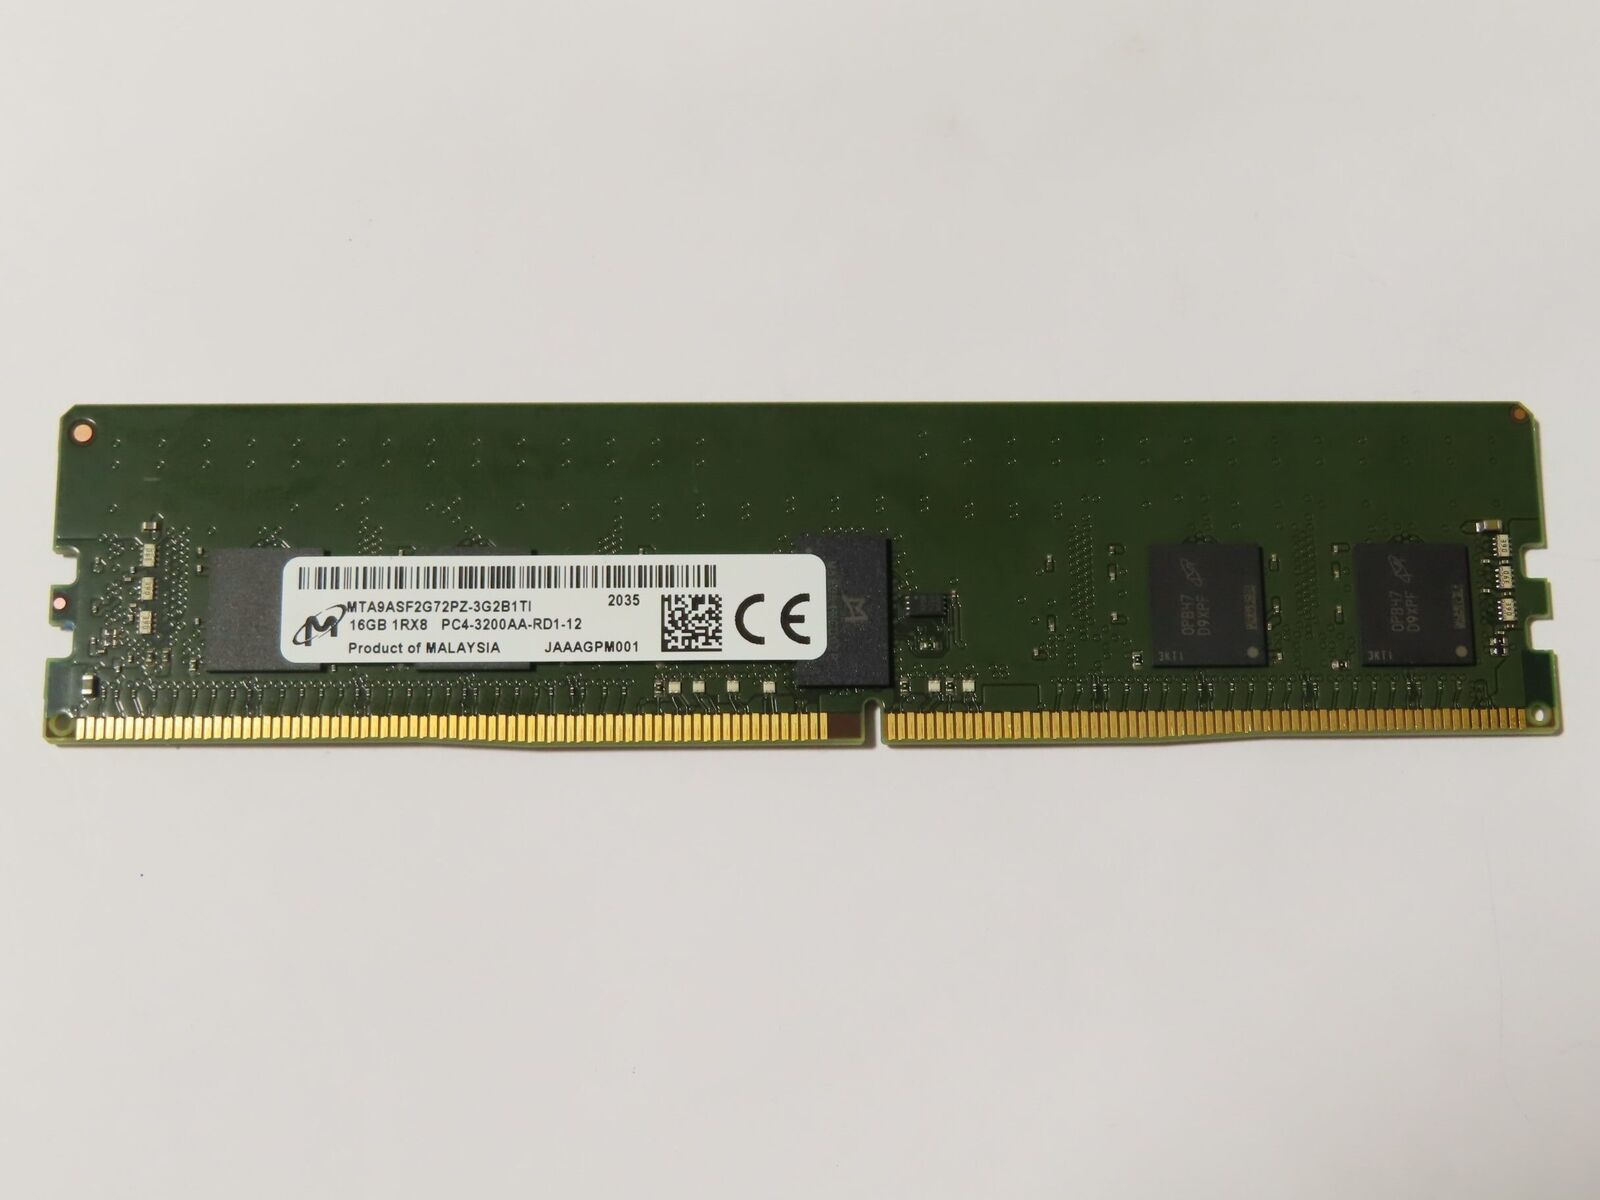 Micron 16GB 1Rx8 PC4-3200AA DDR4 ECC REG RDIMM RAM Memory MTA9ASF2G72PZ-3G2B1